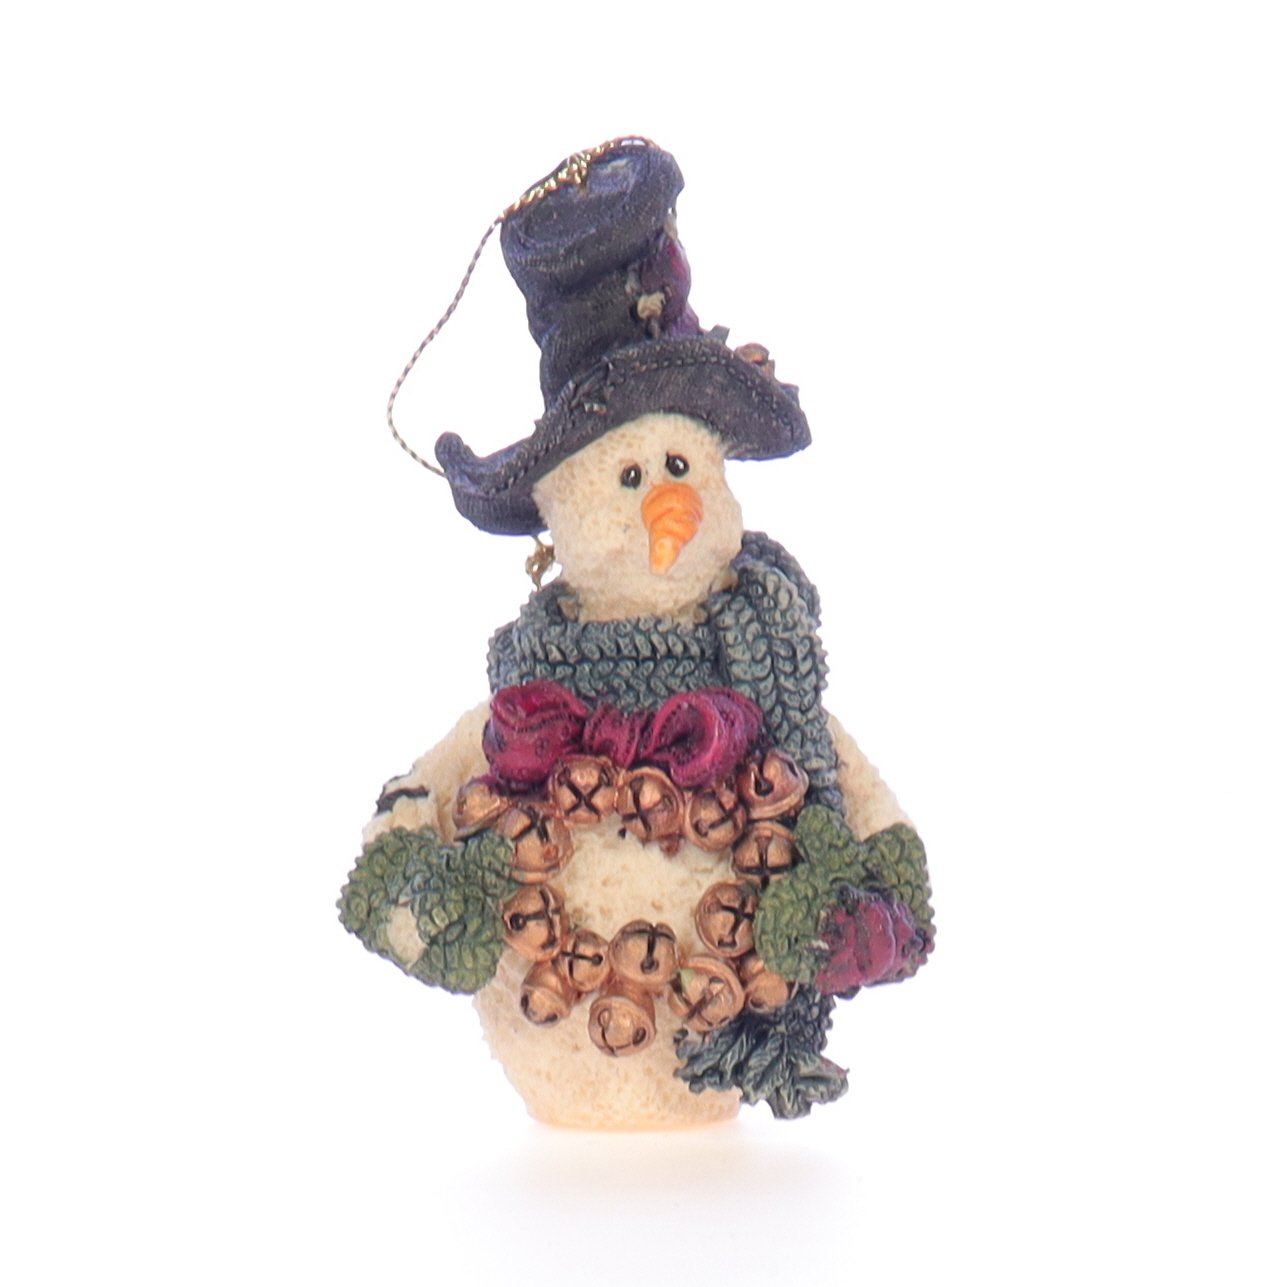 Boyds_Bears_Folkstone_Resin_Figurine_Ornament_Jingles_the_Snowman_with_Wreath_2562_01